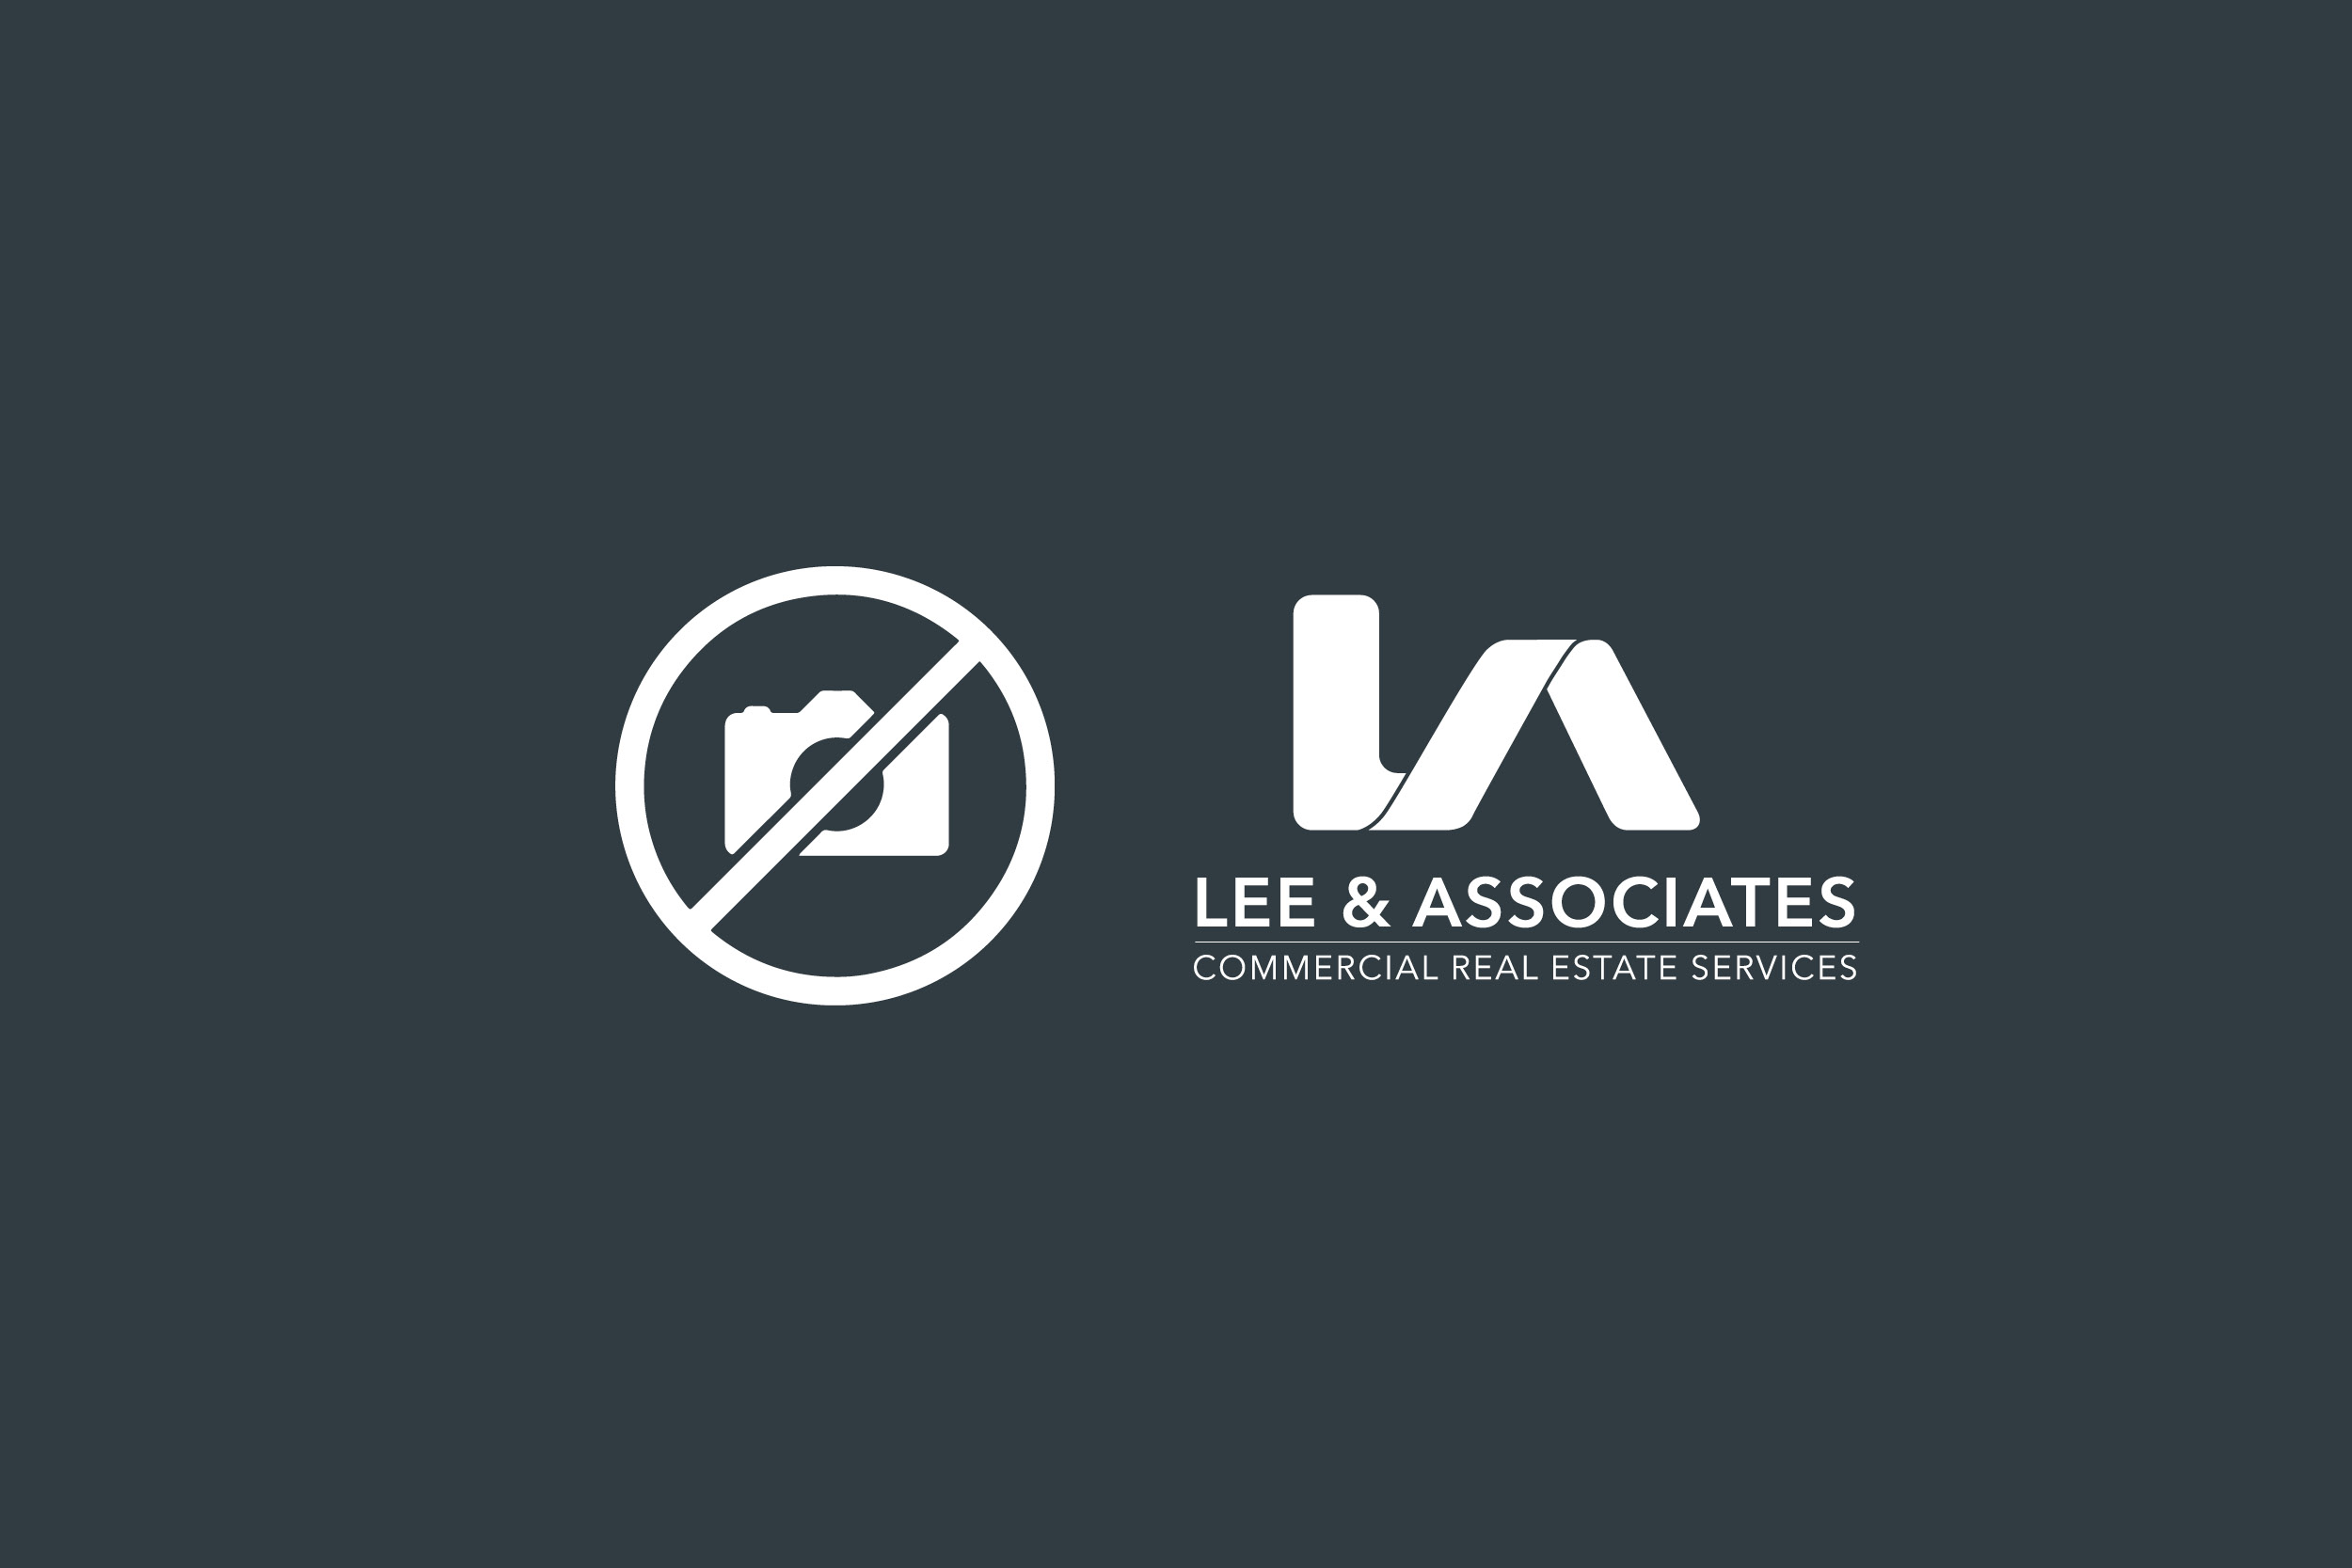 Lee & Associates Dallas Fort Worth Negotiates a 50,138 SF Industrial Sale Transaction